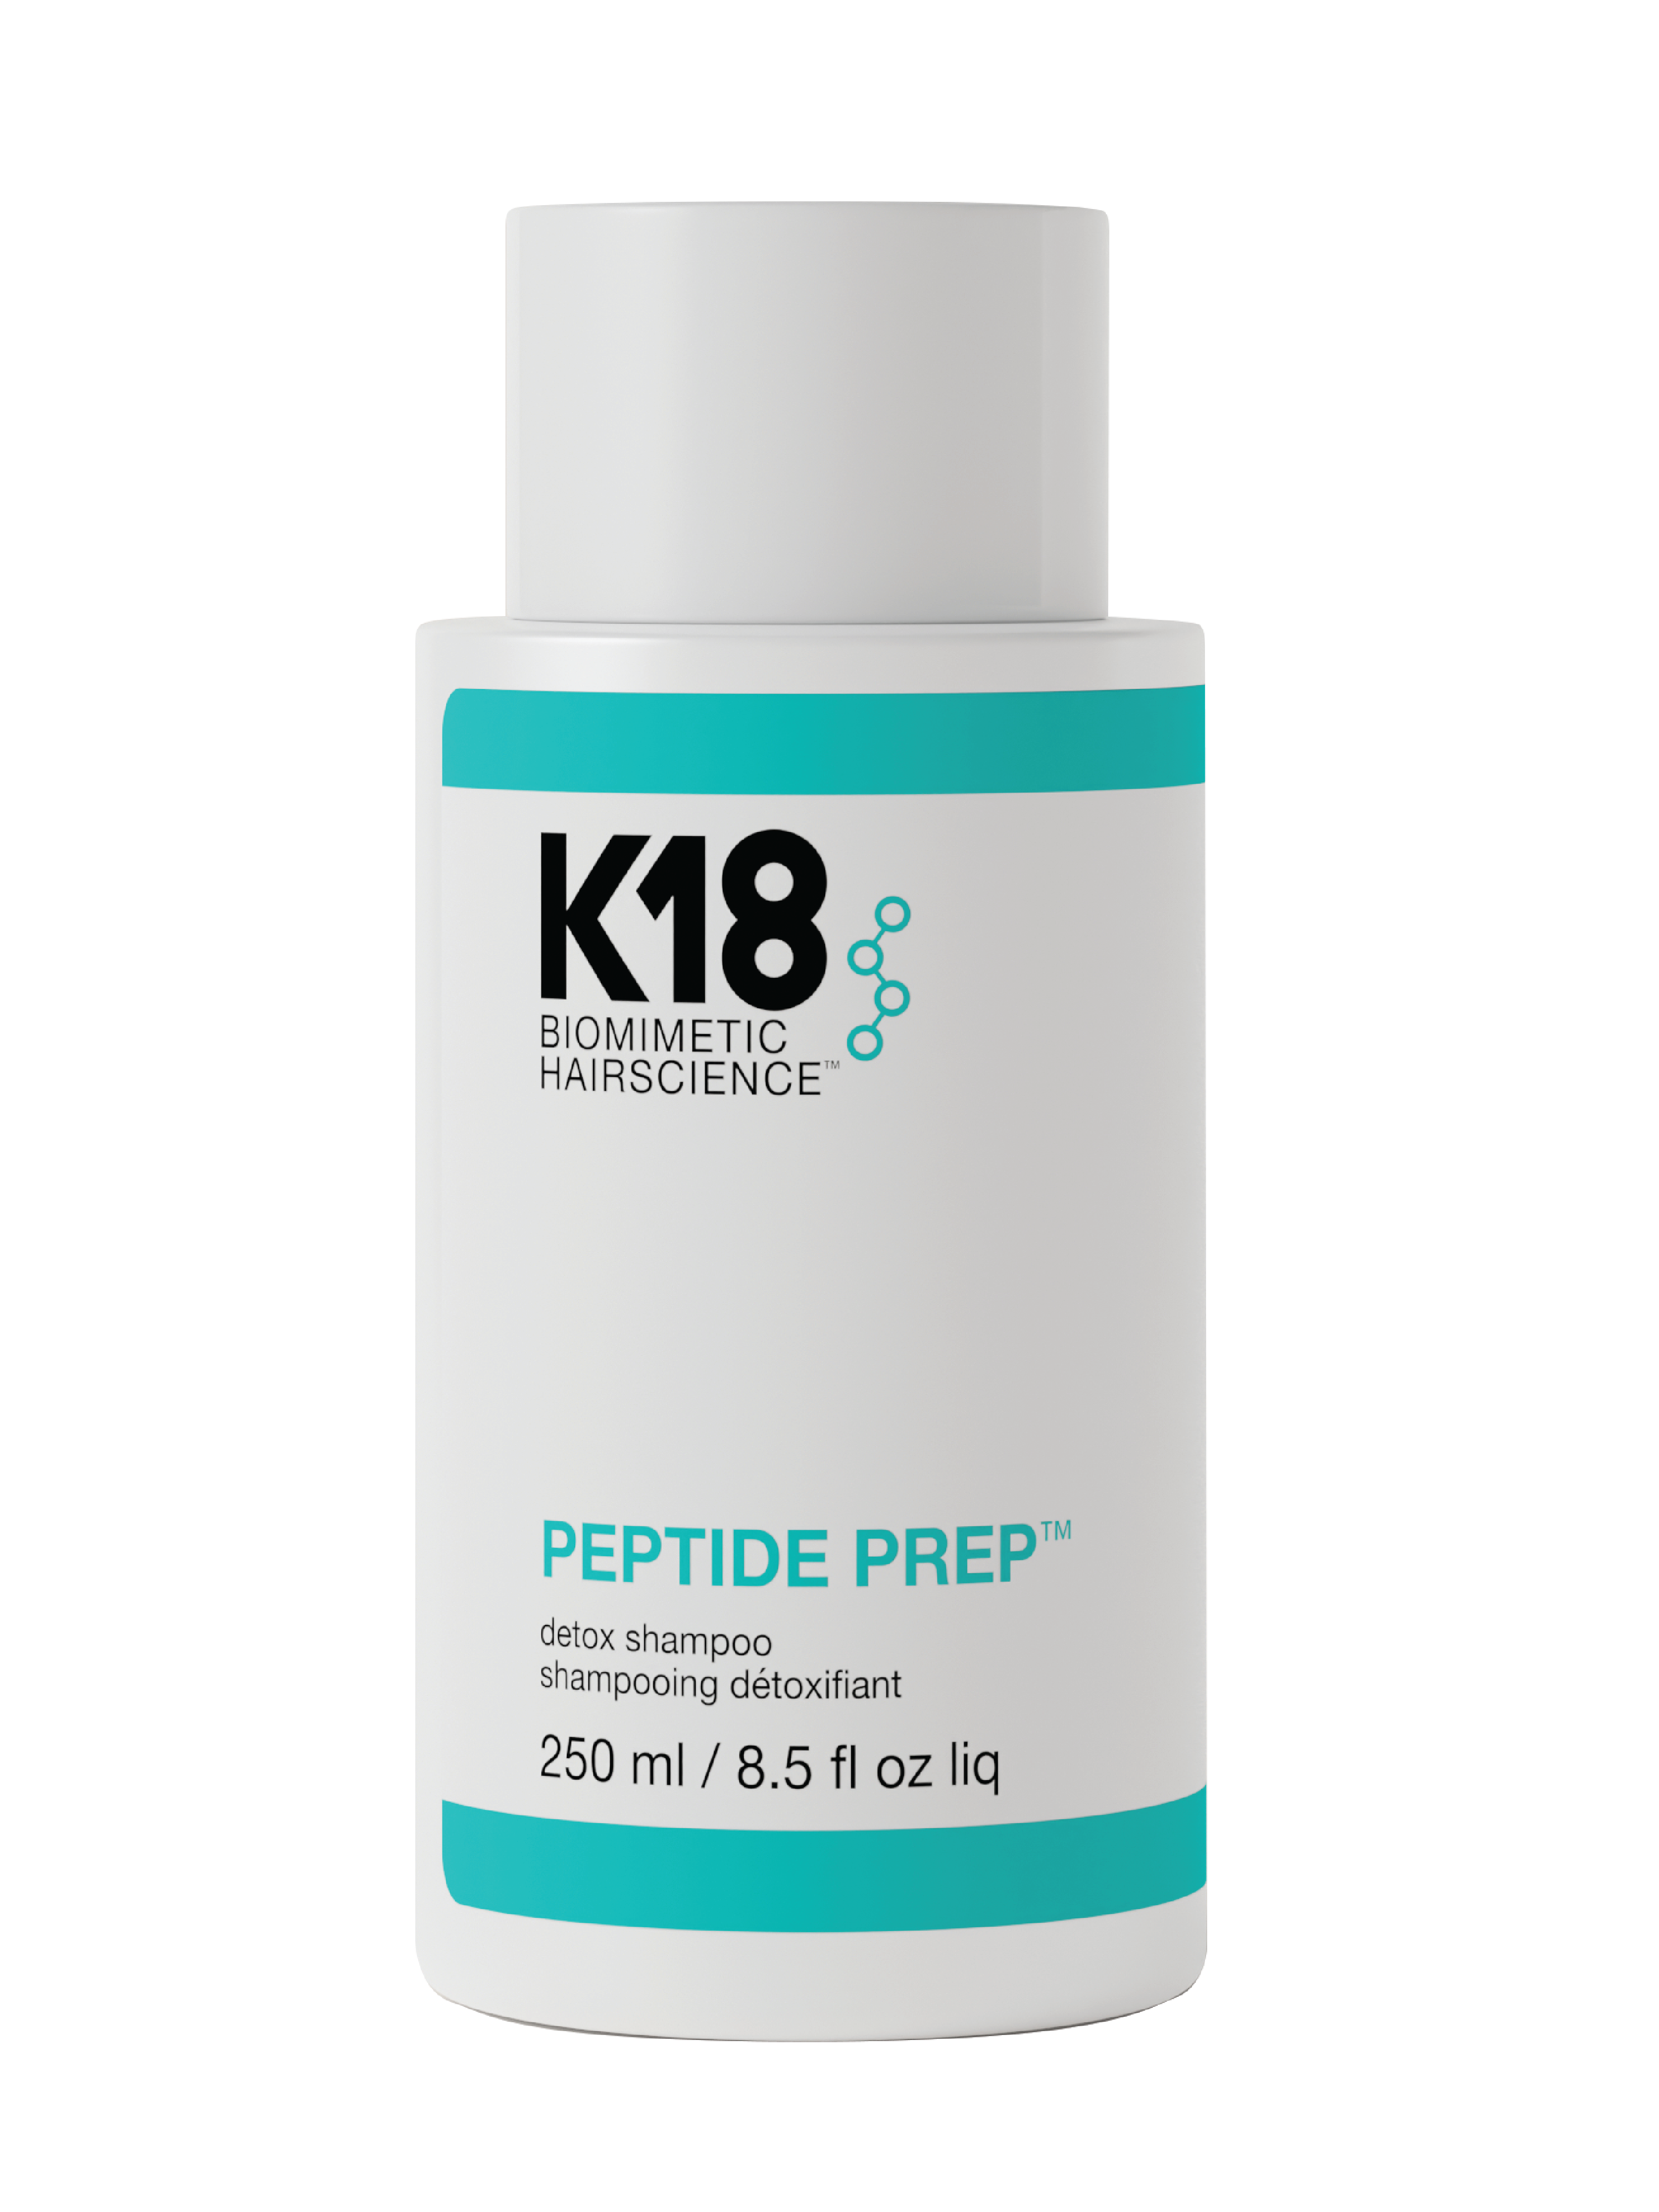 K18 Peptide Prep Detox Shampoo, 250 ml